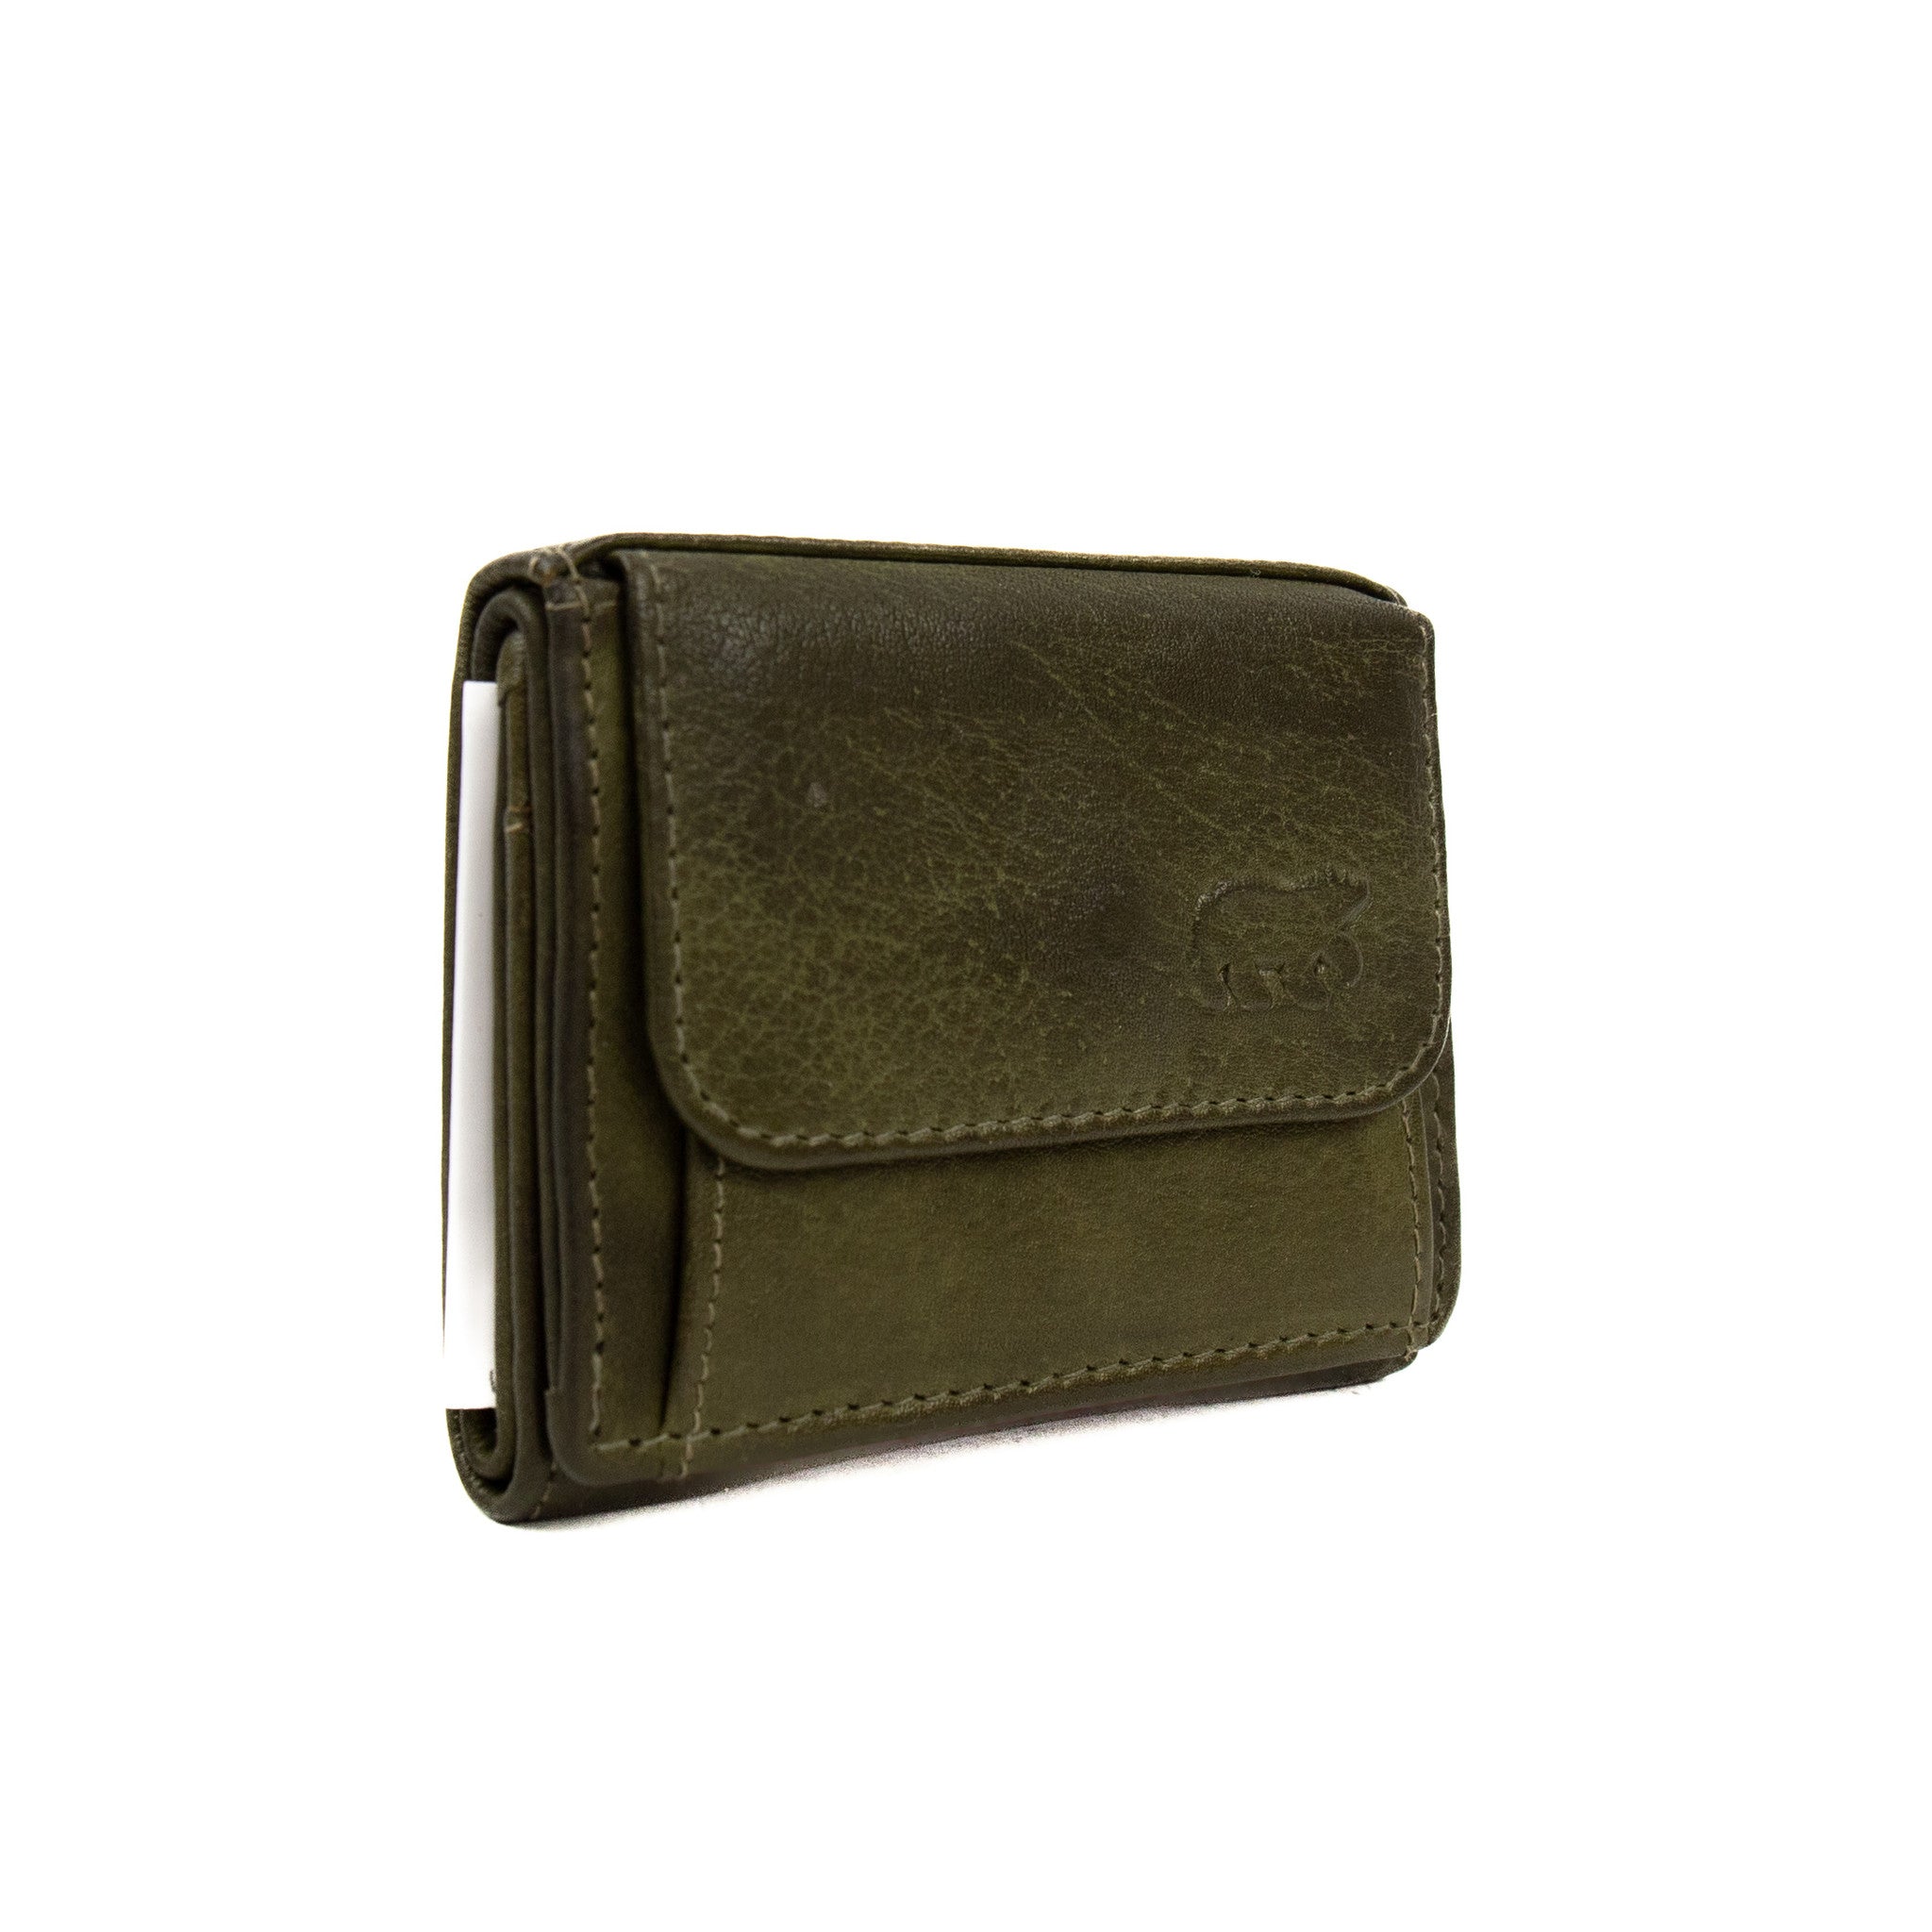 Wallet 'Nana' green - CP 4102